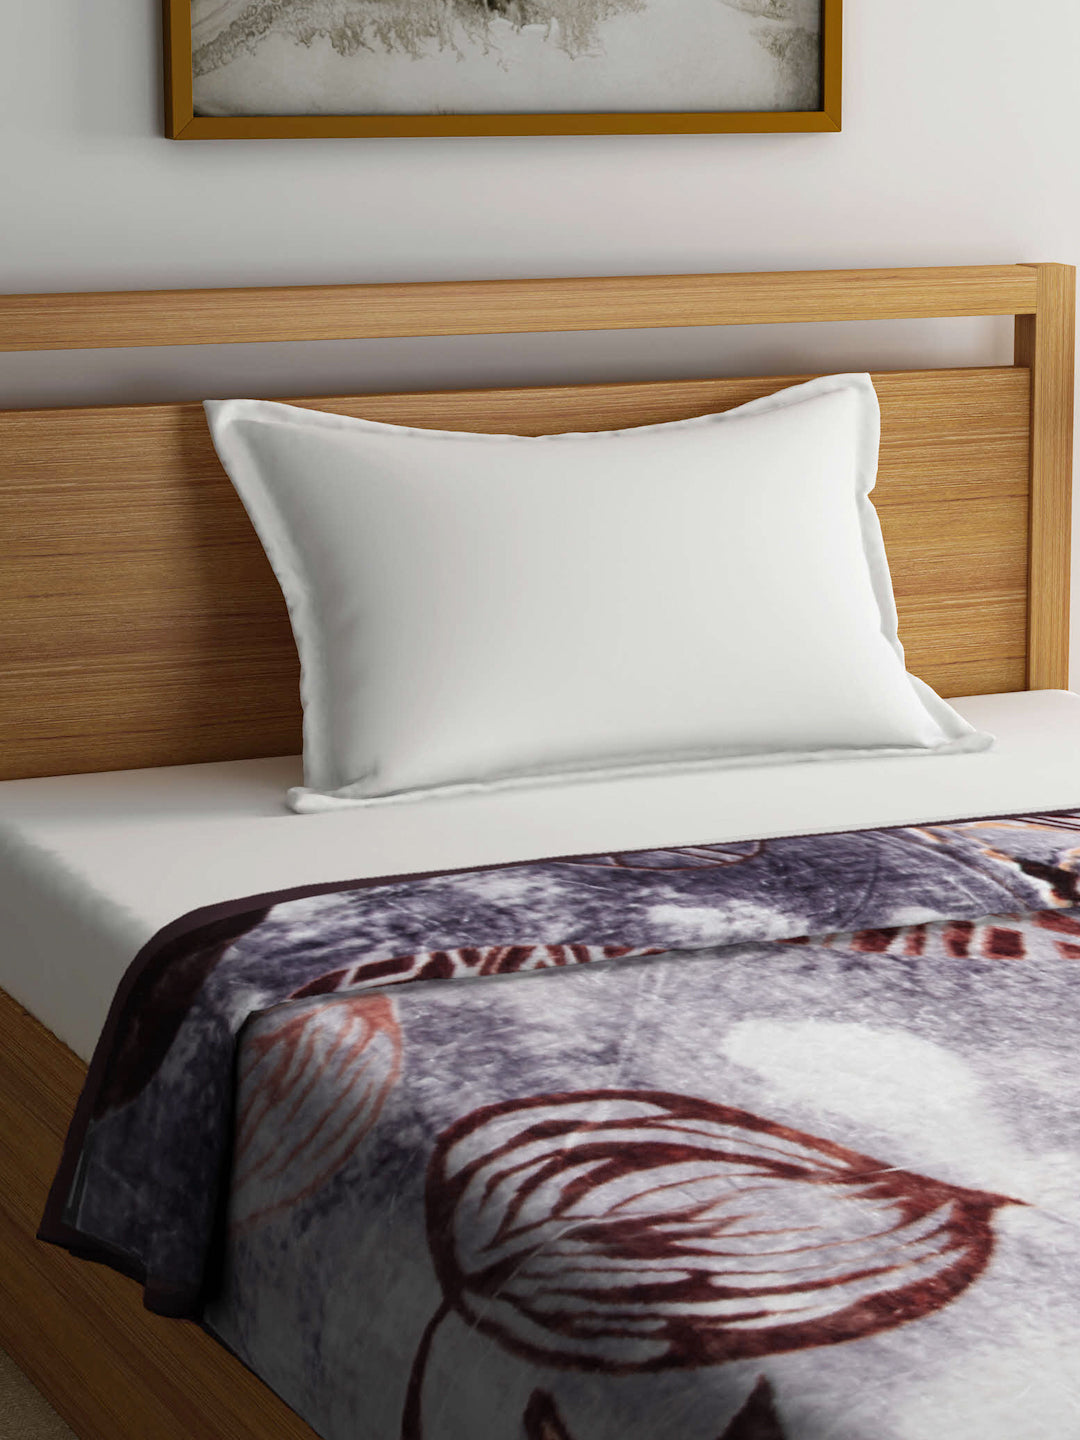 Klotthe Unisex Multi Floral Heavy Winter 1000 GSM Single Bed Blanket